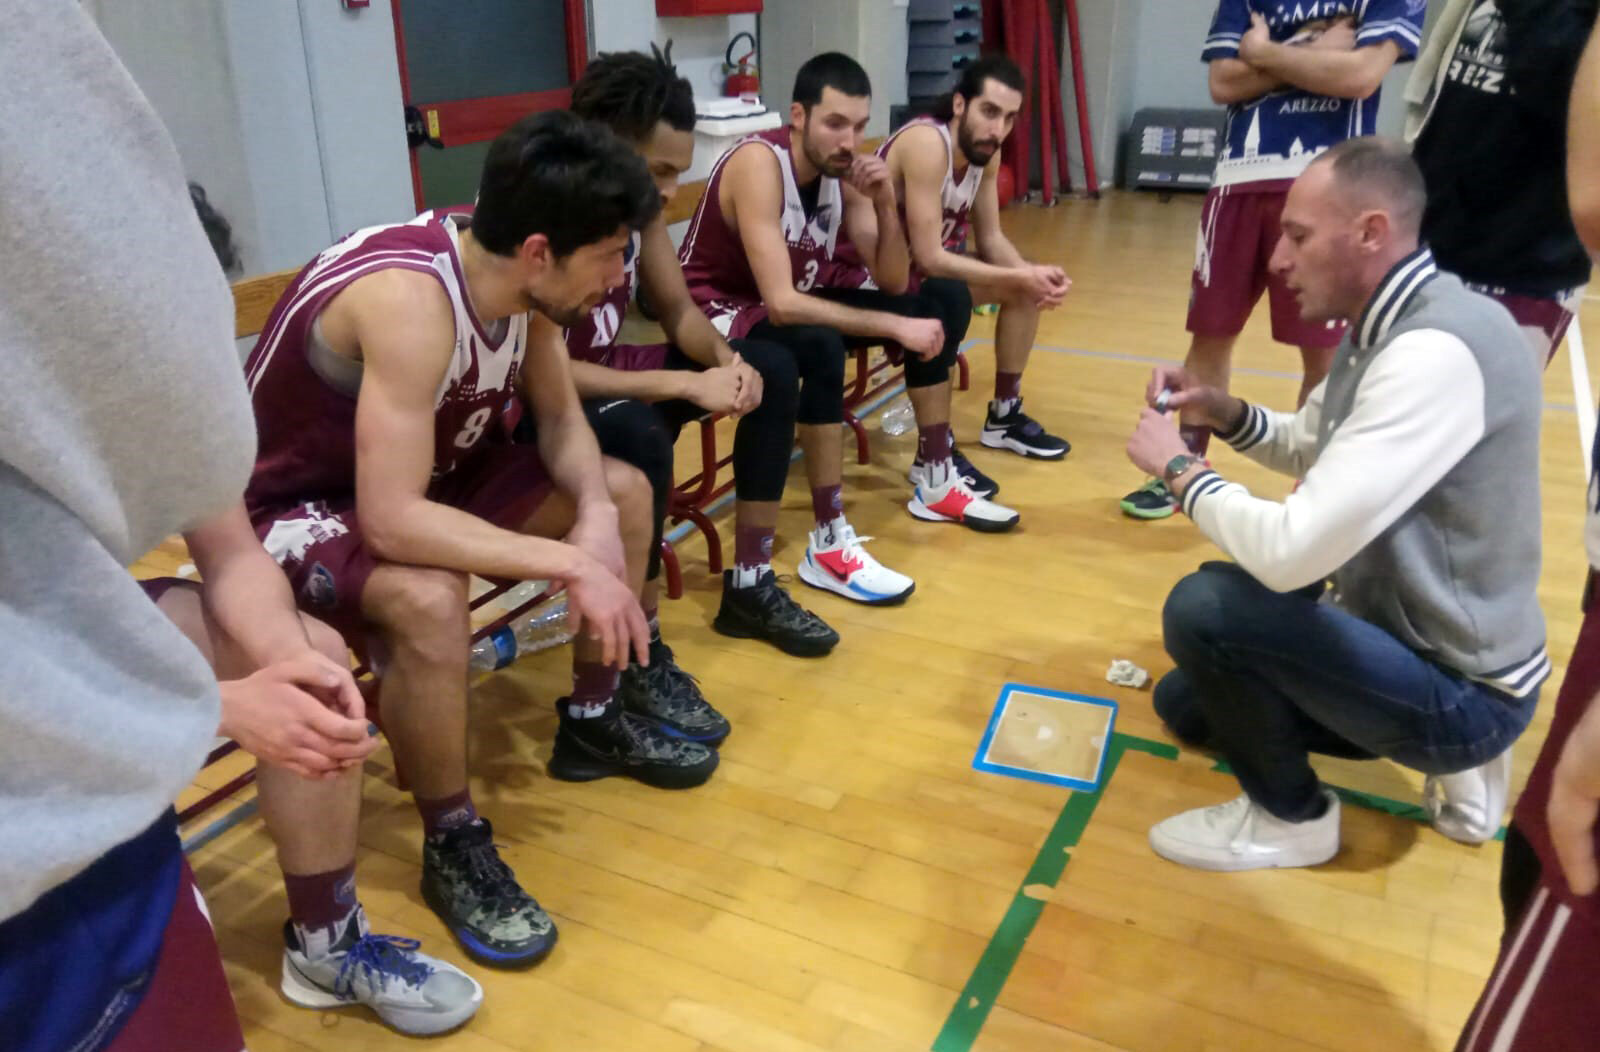 Amen Scuola Basket batte Spezia al Palasport Estra